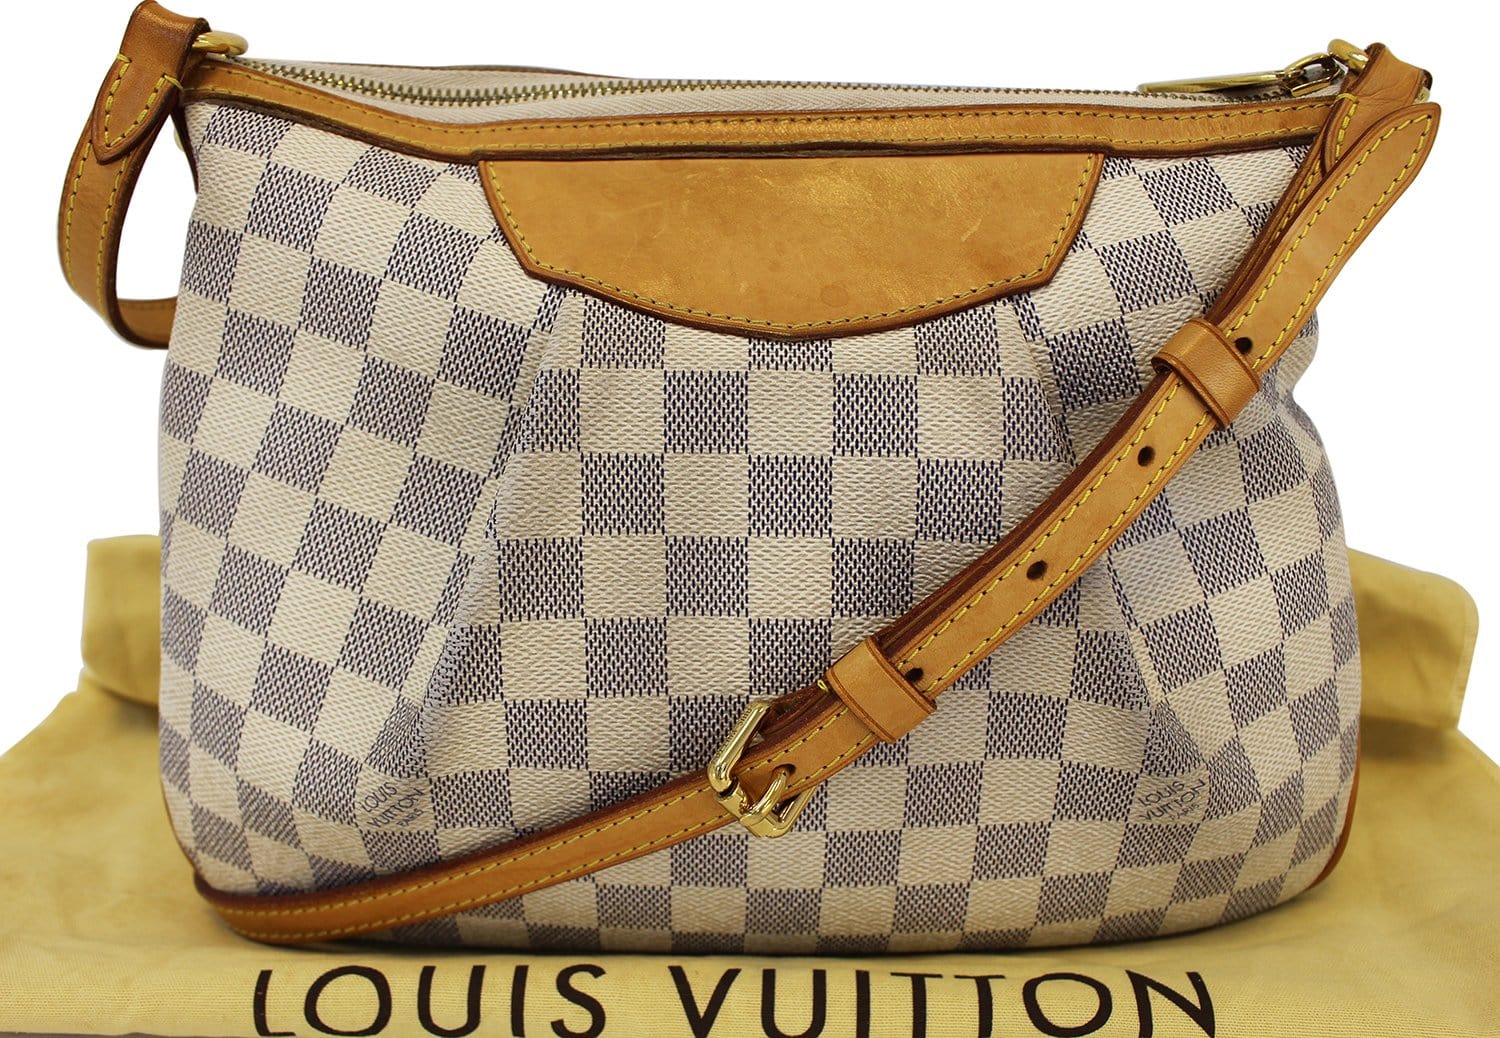 In LVoe with Louis Vuitton: Louis Vuitton Damier Azur Siracusa